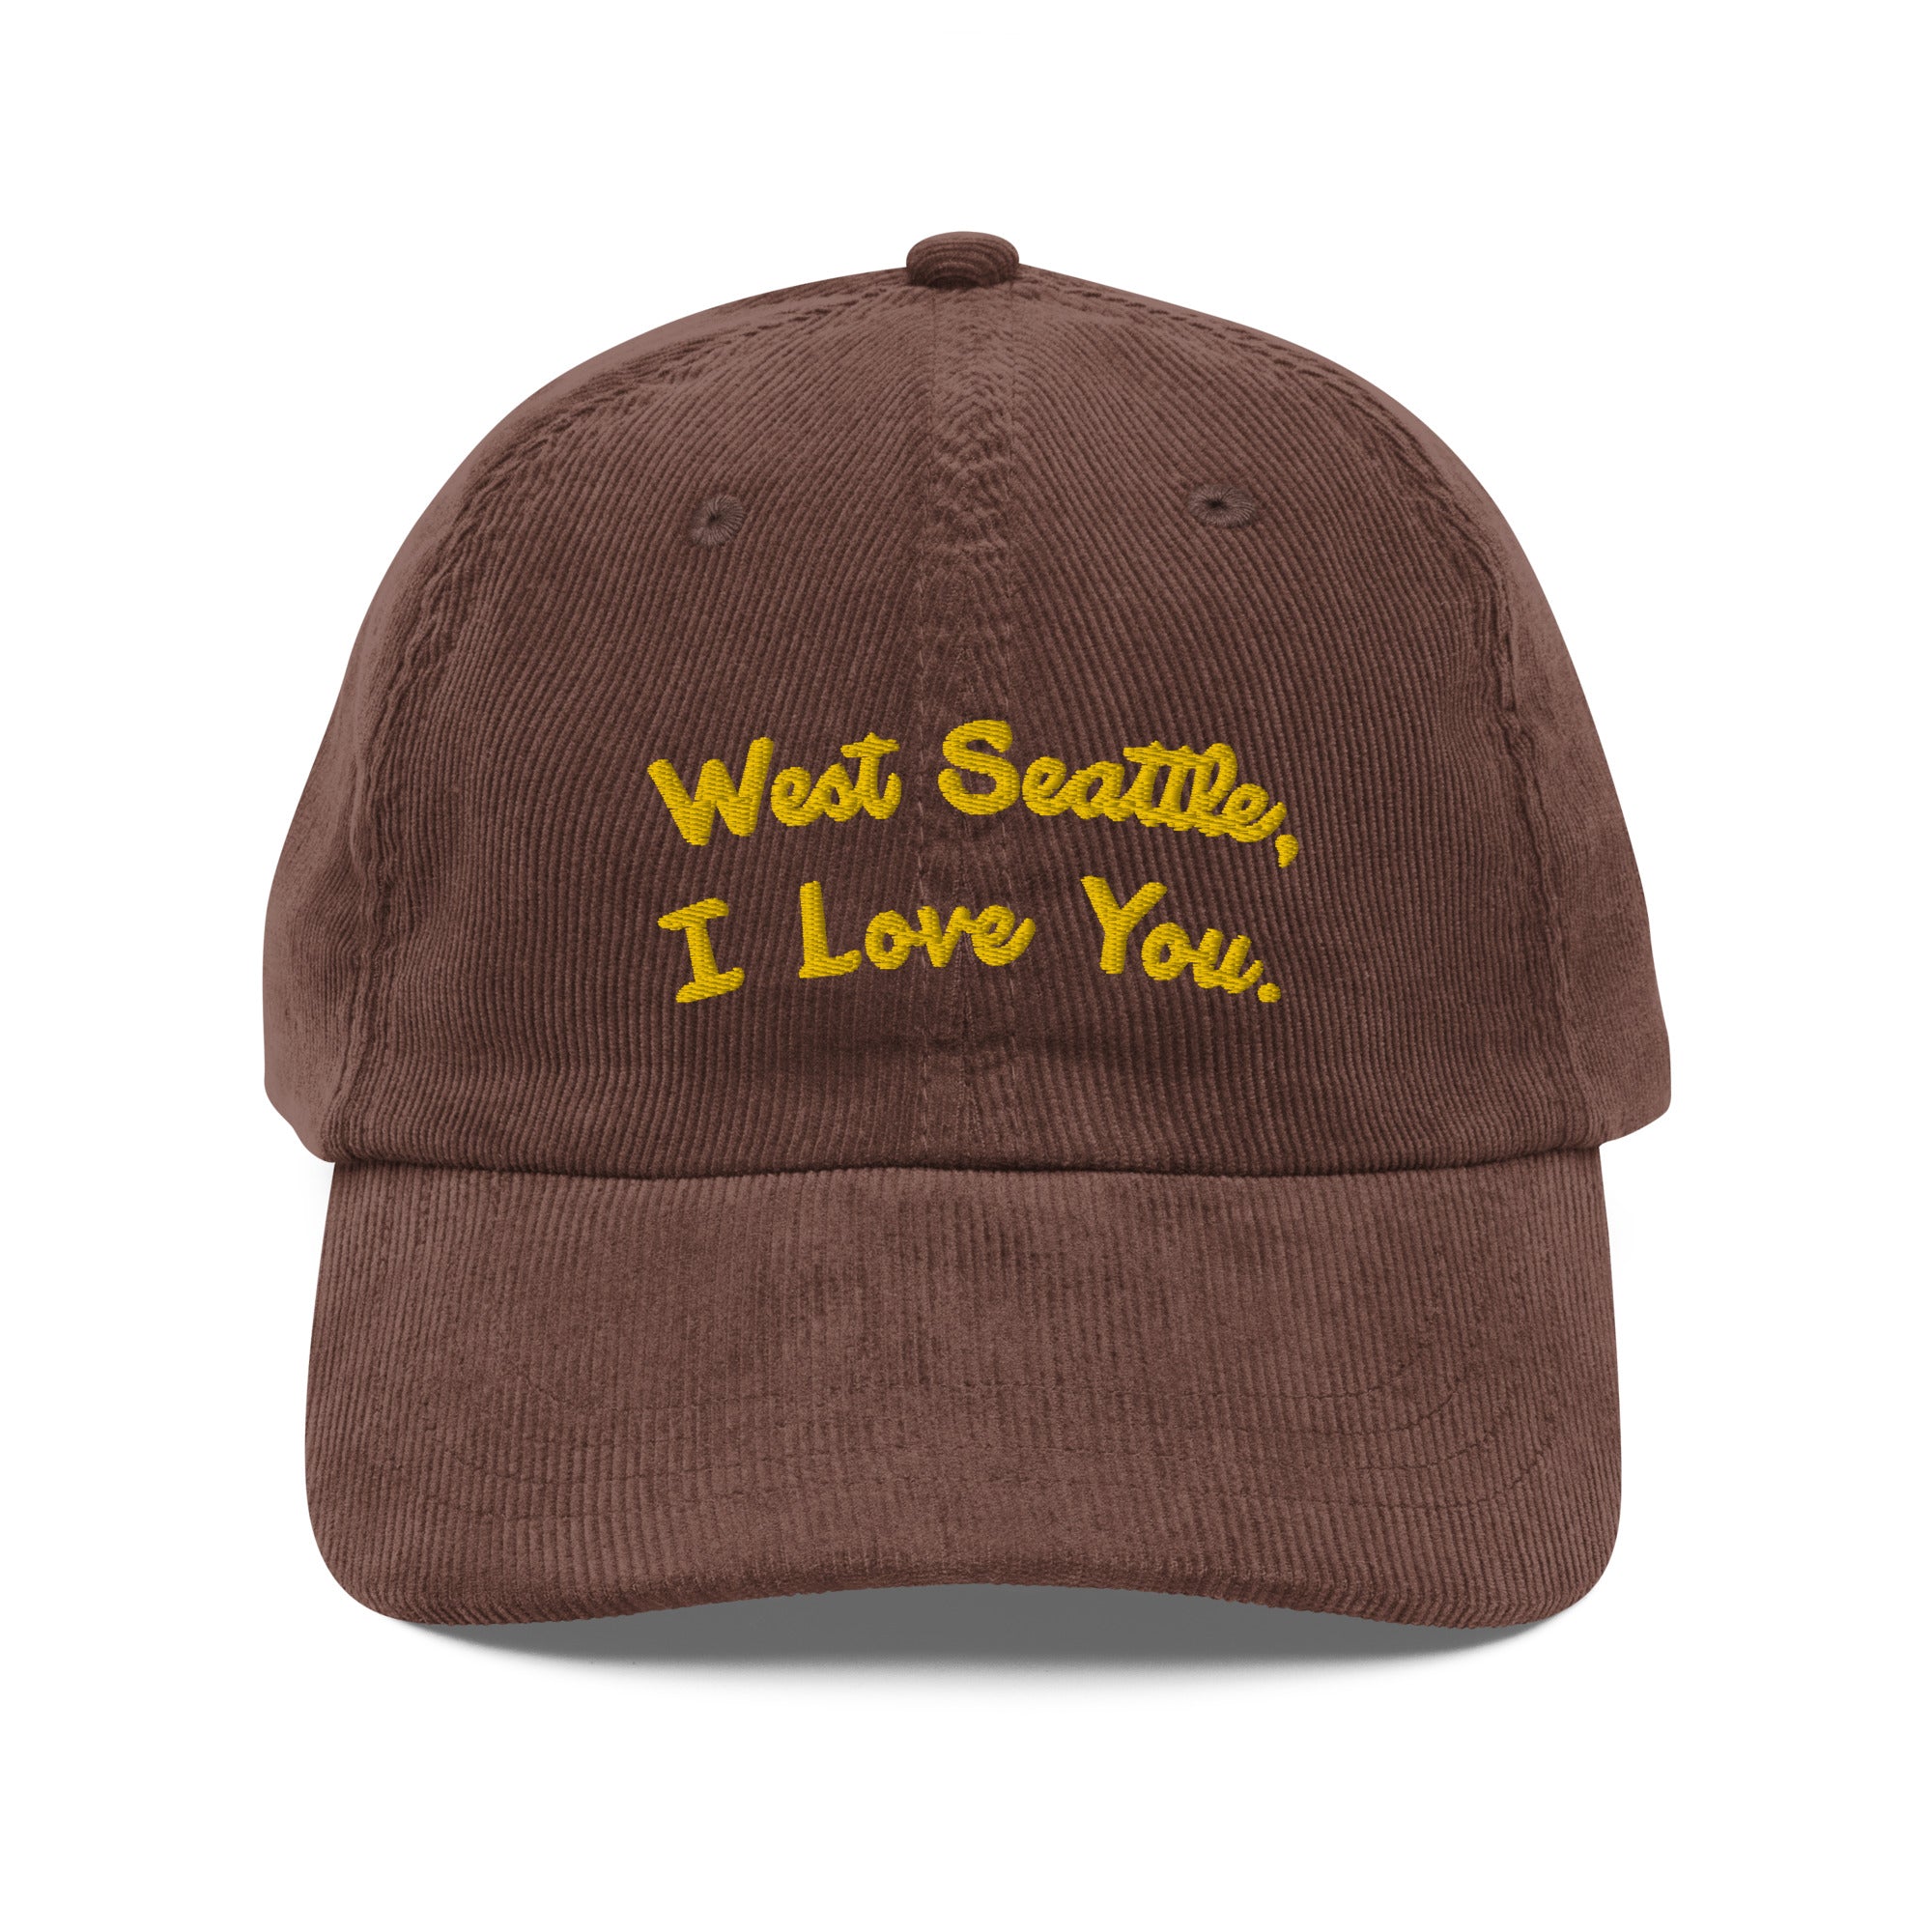 I Love You Corduroy Hat - West Seattle | Seattle, WA